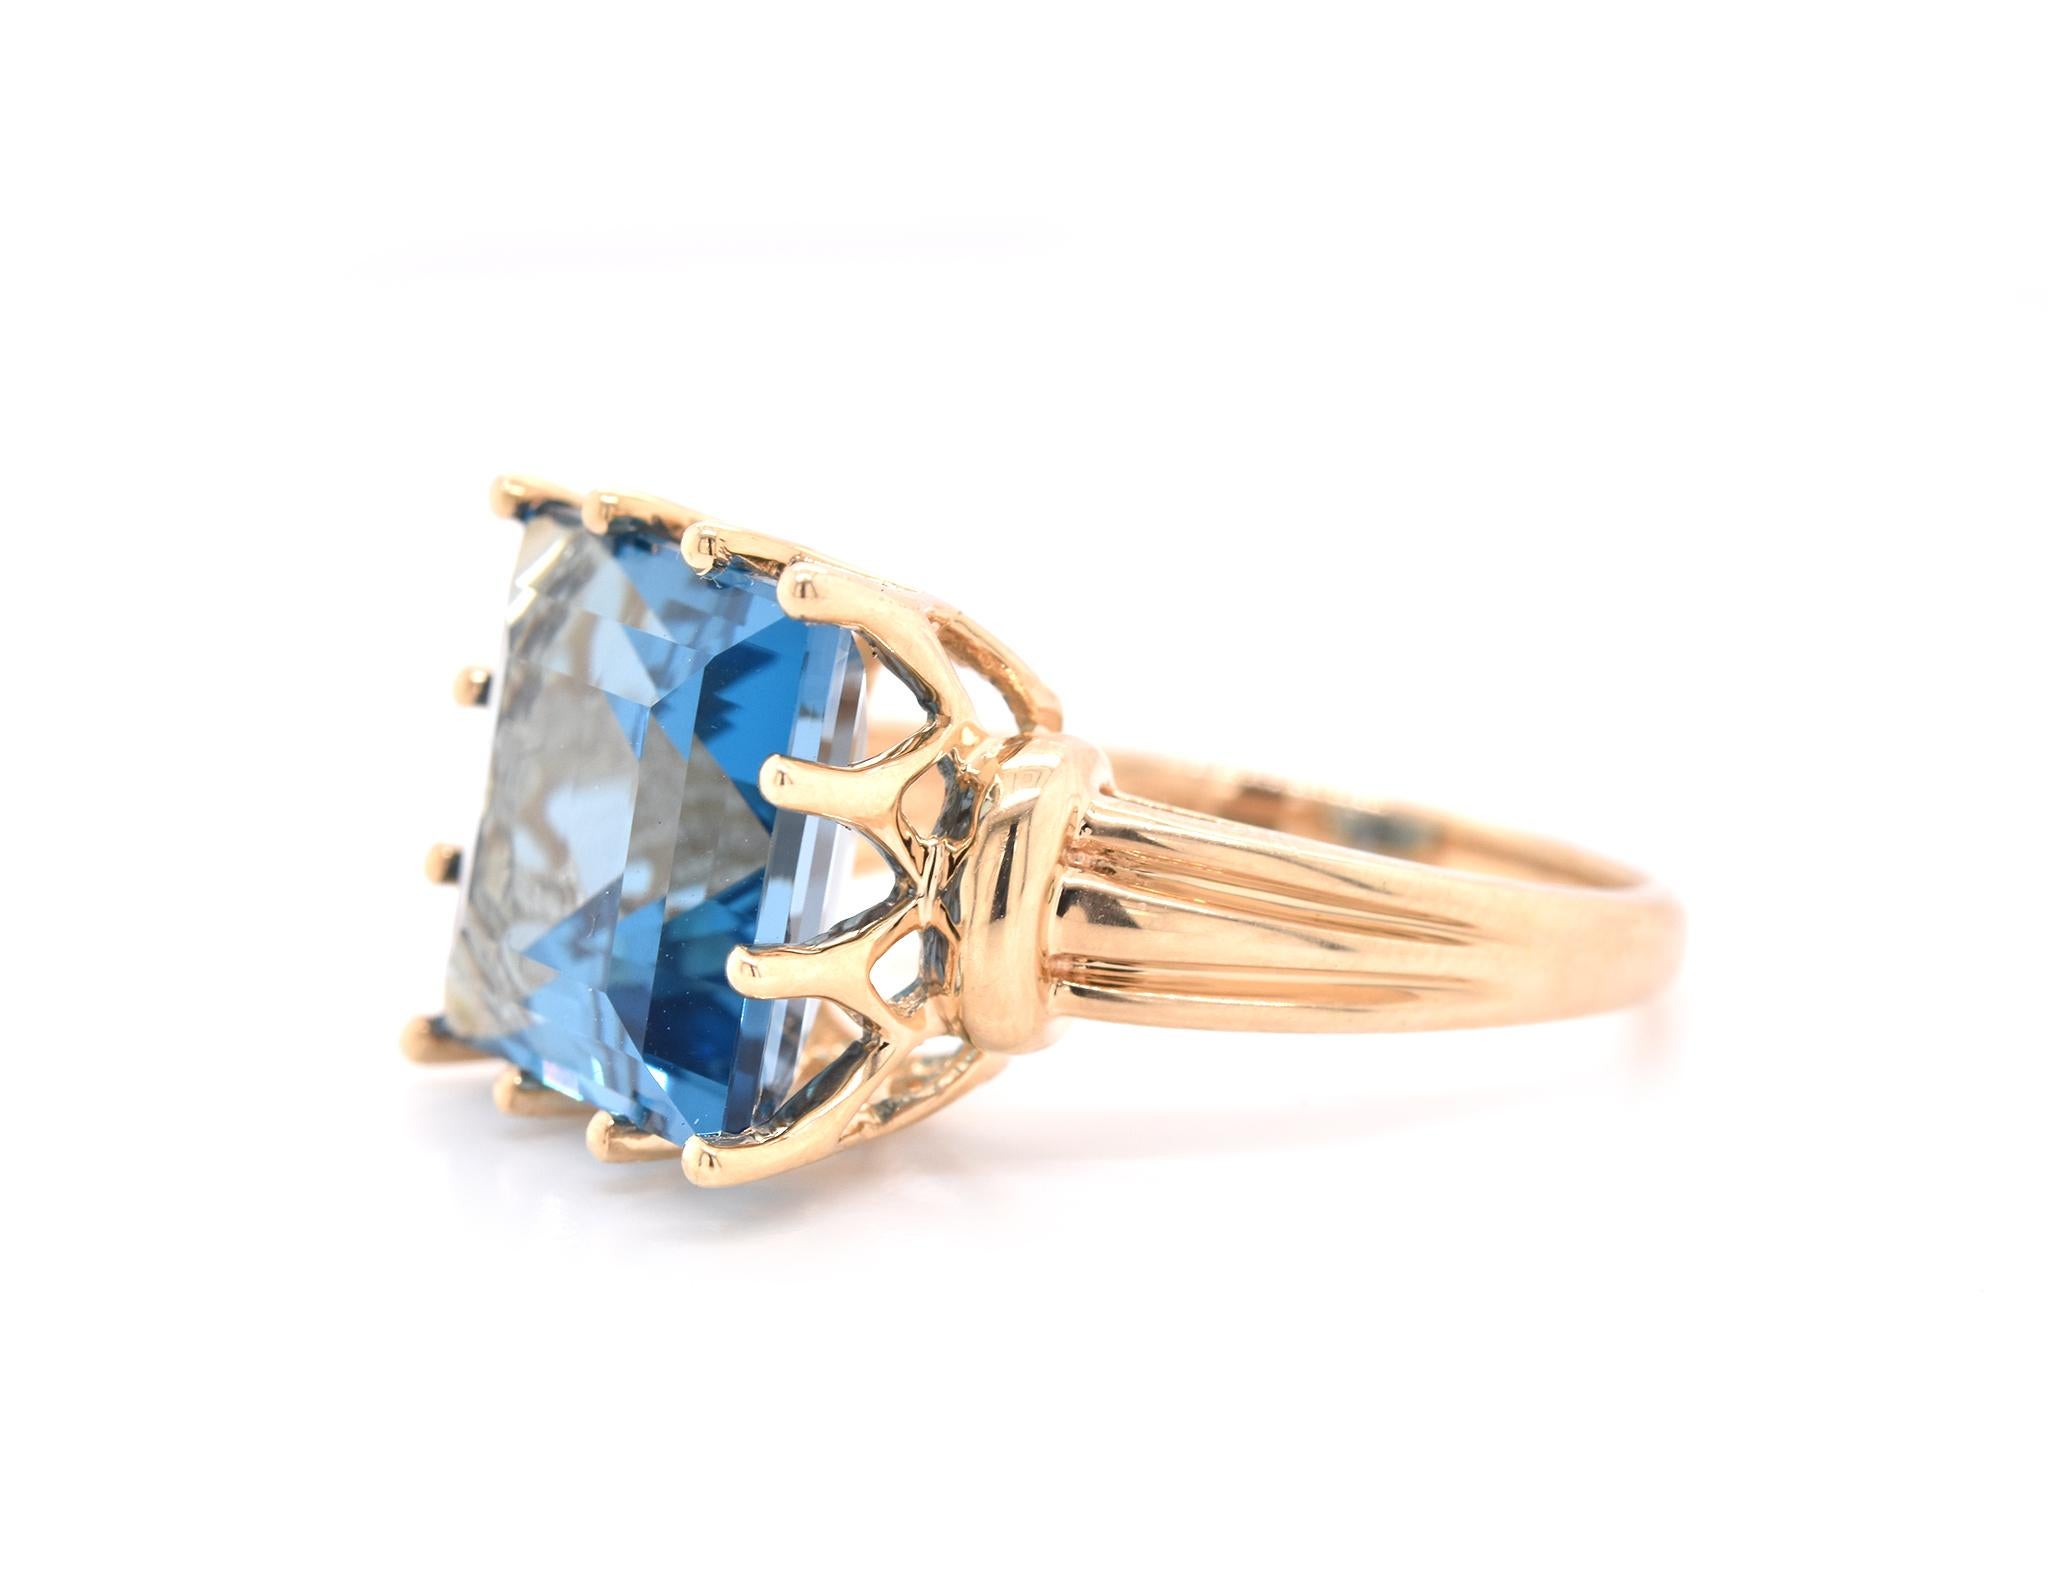 10 carat blue topaz ring